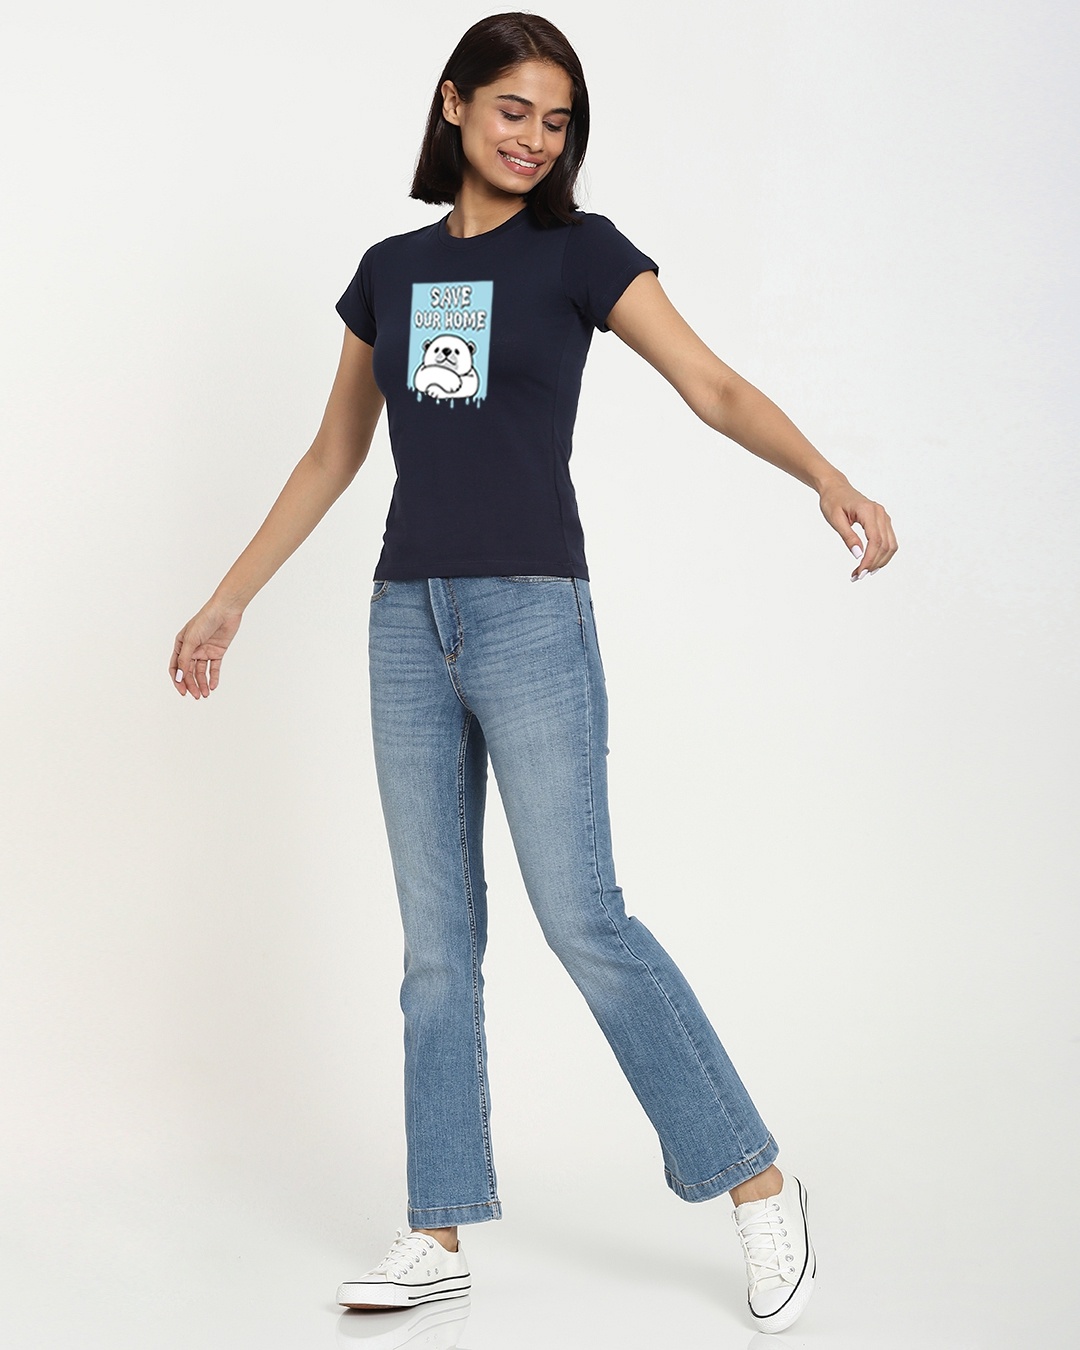 Shop Women's Navy Blue Save Our Home Polar Bear Home Slim Fit T-shirt-Design